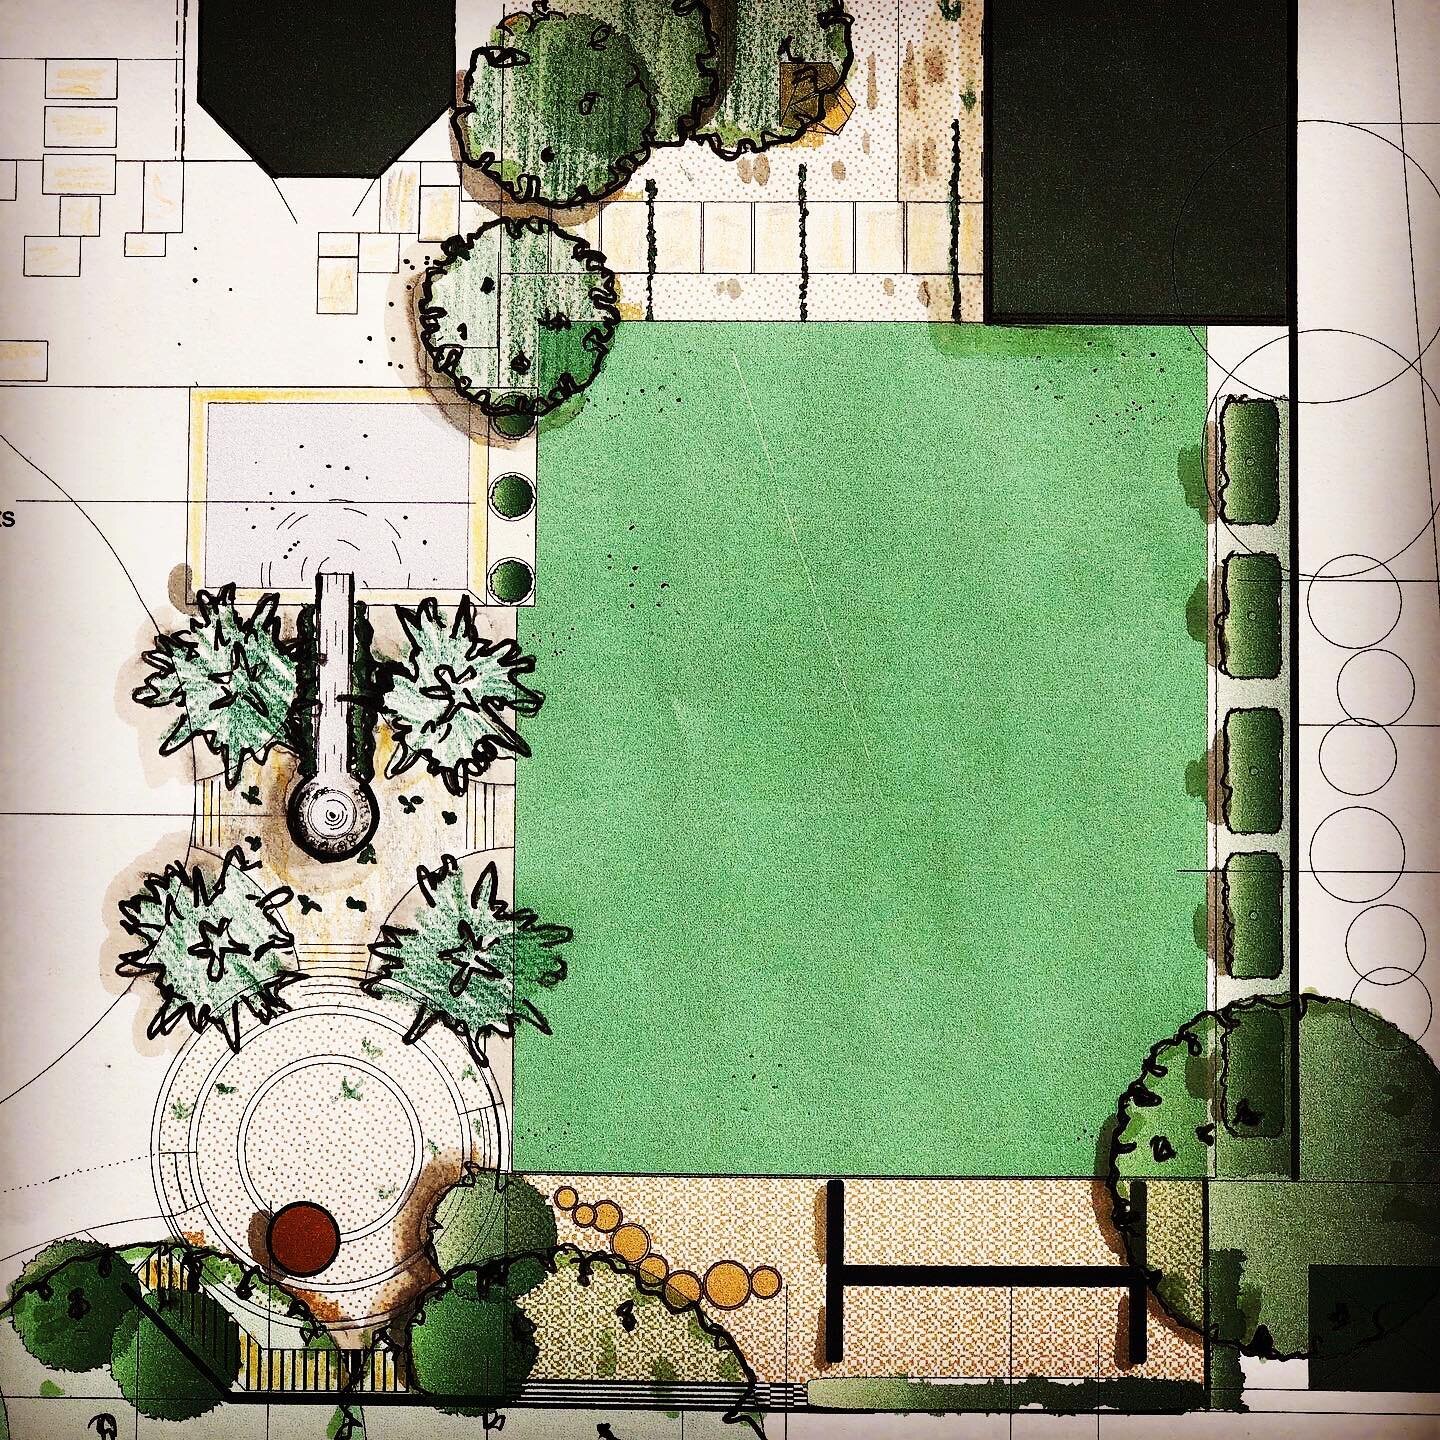 .
Initial concept plan. 
#gardenoffice.
#firepit .
#kidsplayarea .
#seating 
#gardendesign 
#bansteadvillage